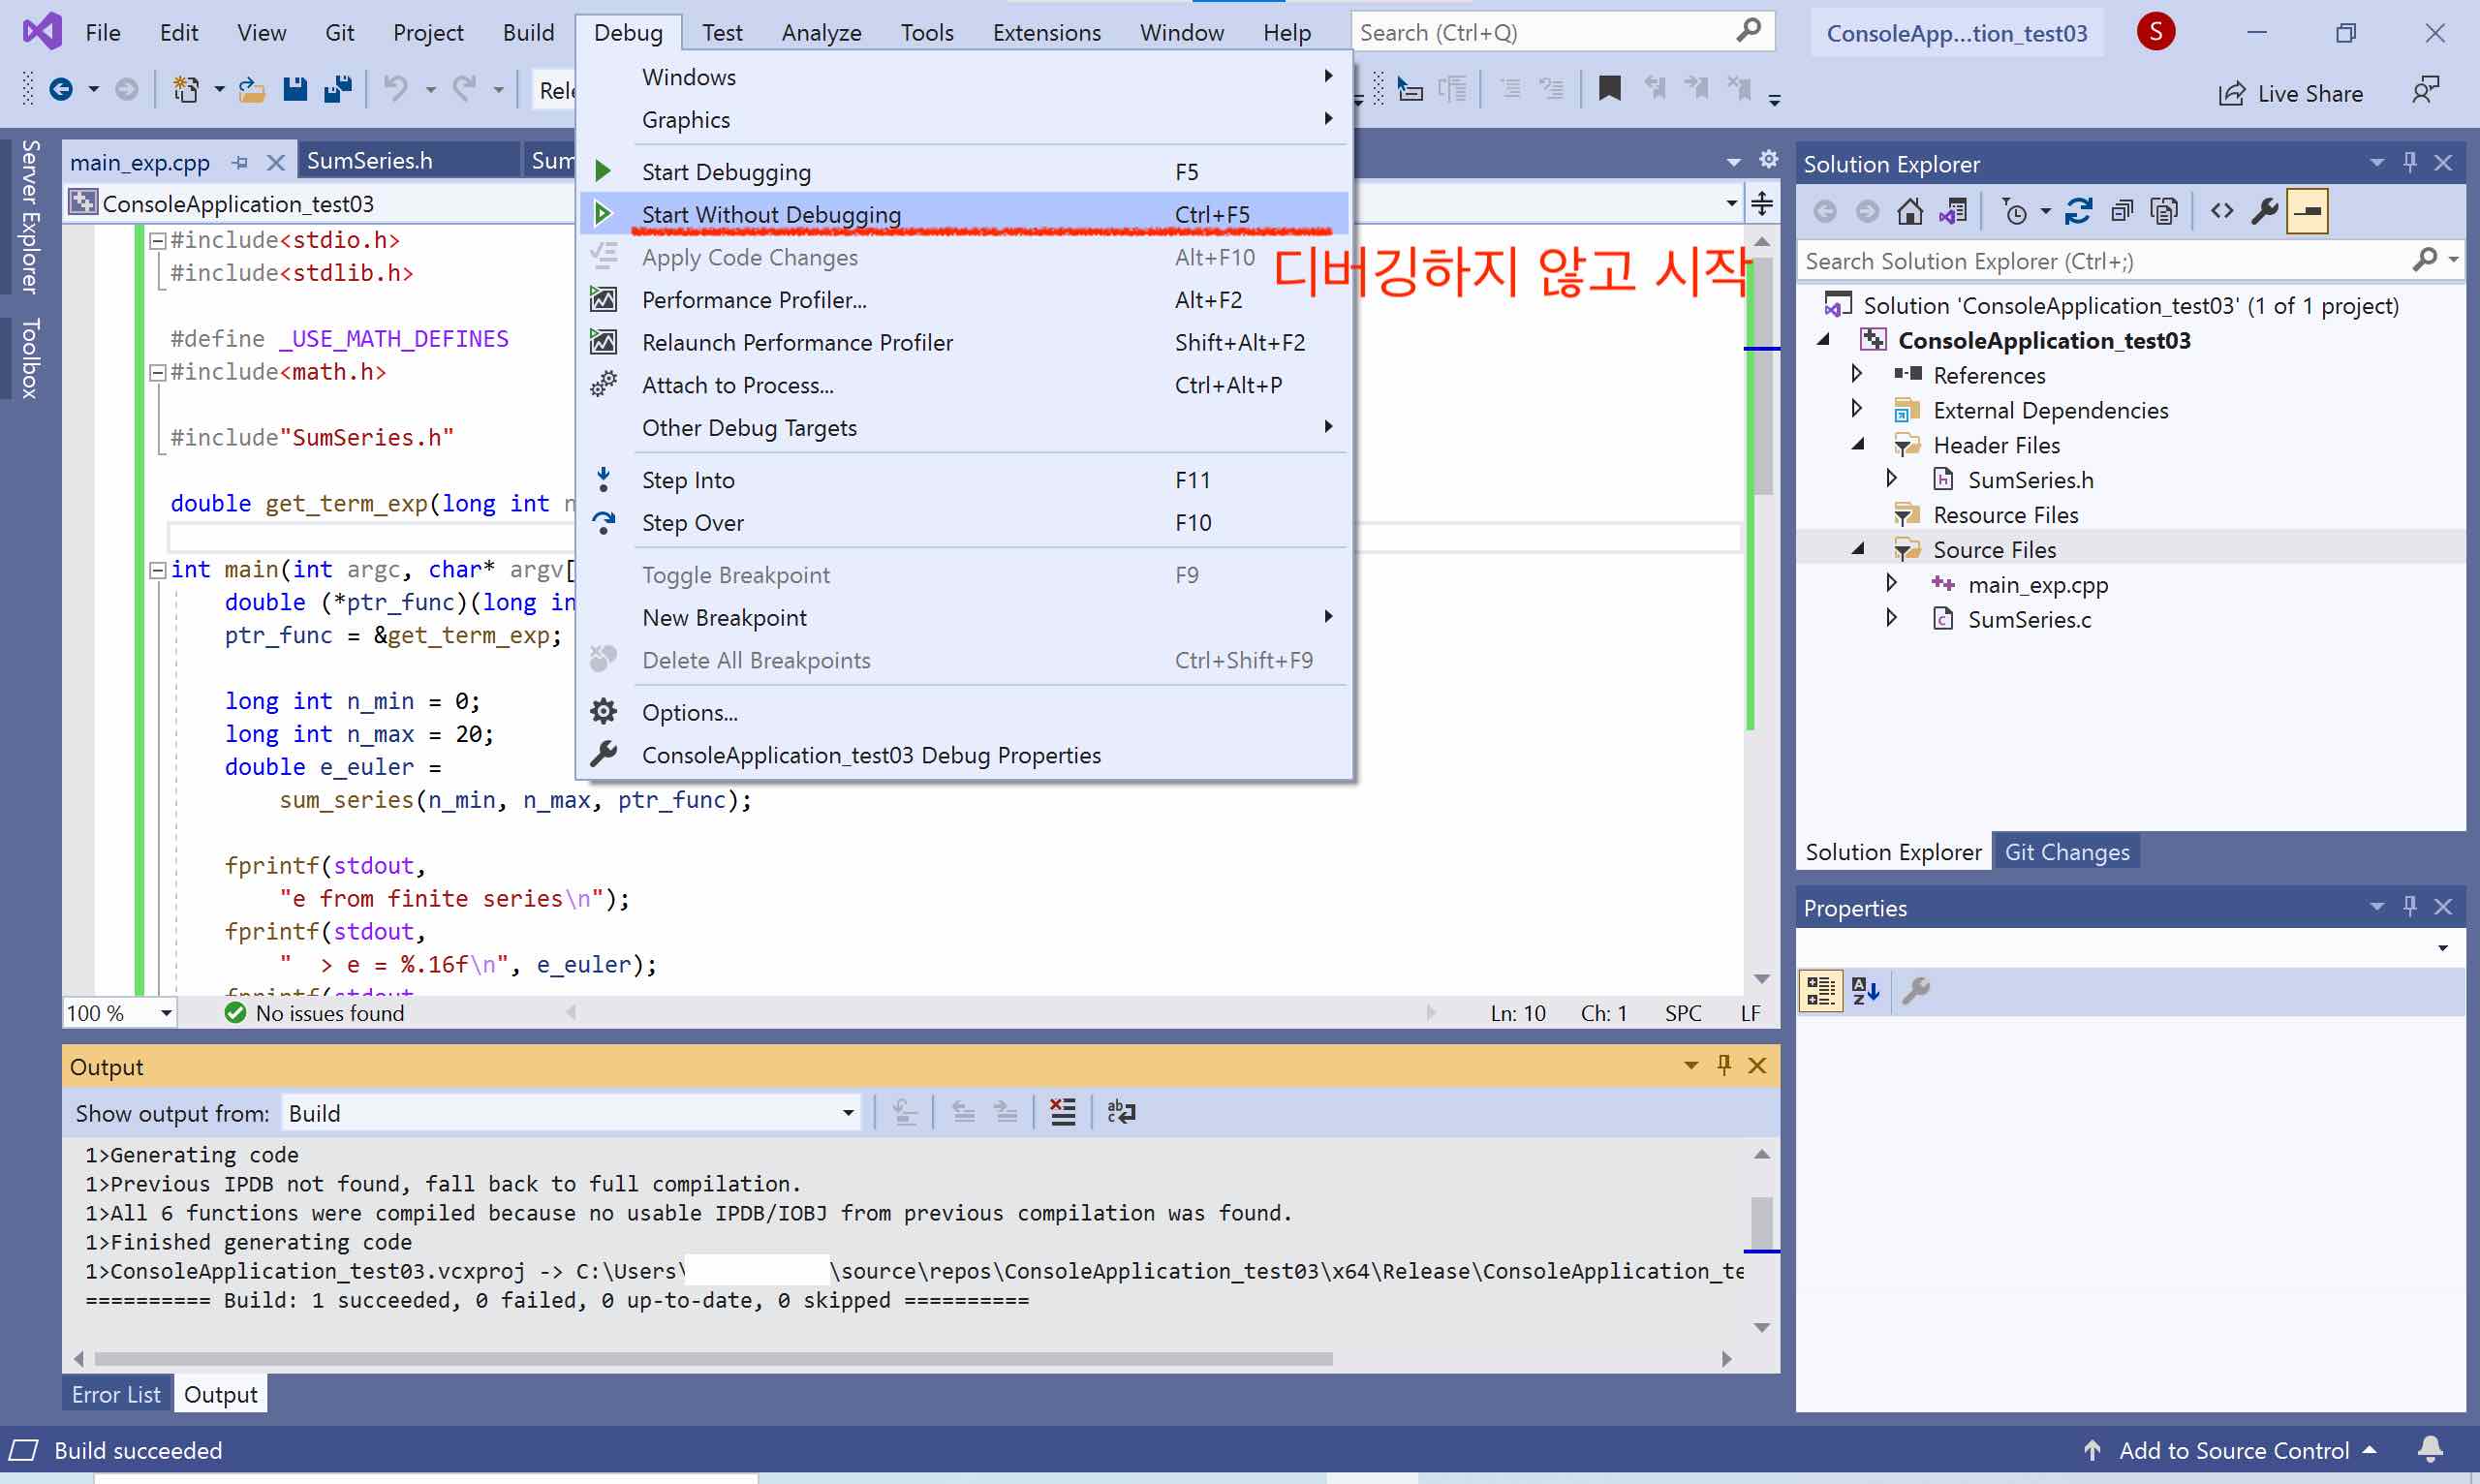 screenshot of Visual Studio 2019 main screen, showing an option to start without debugging